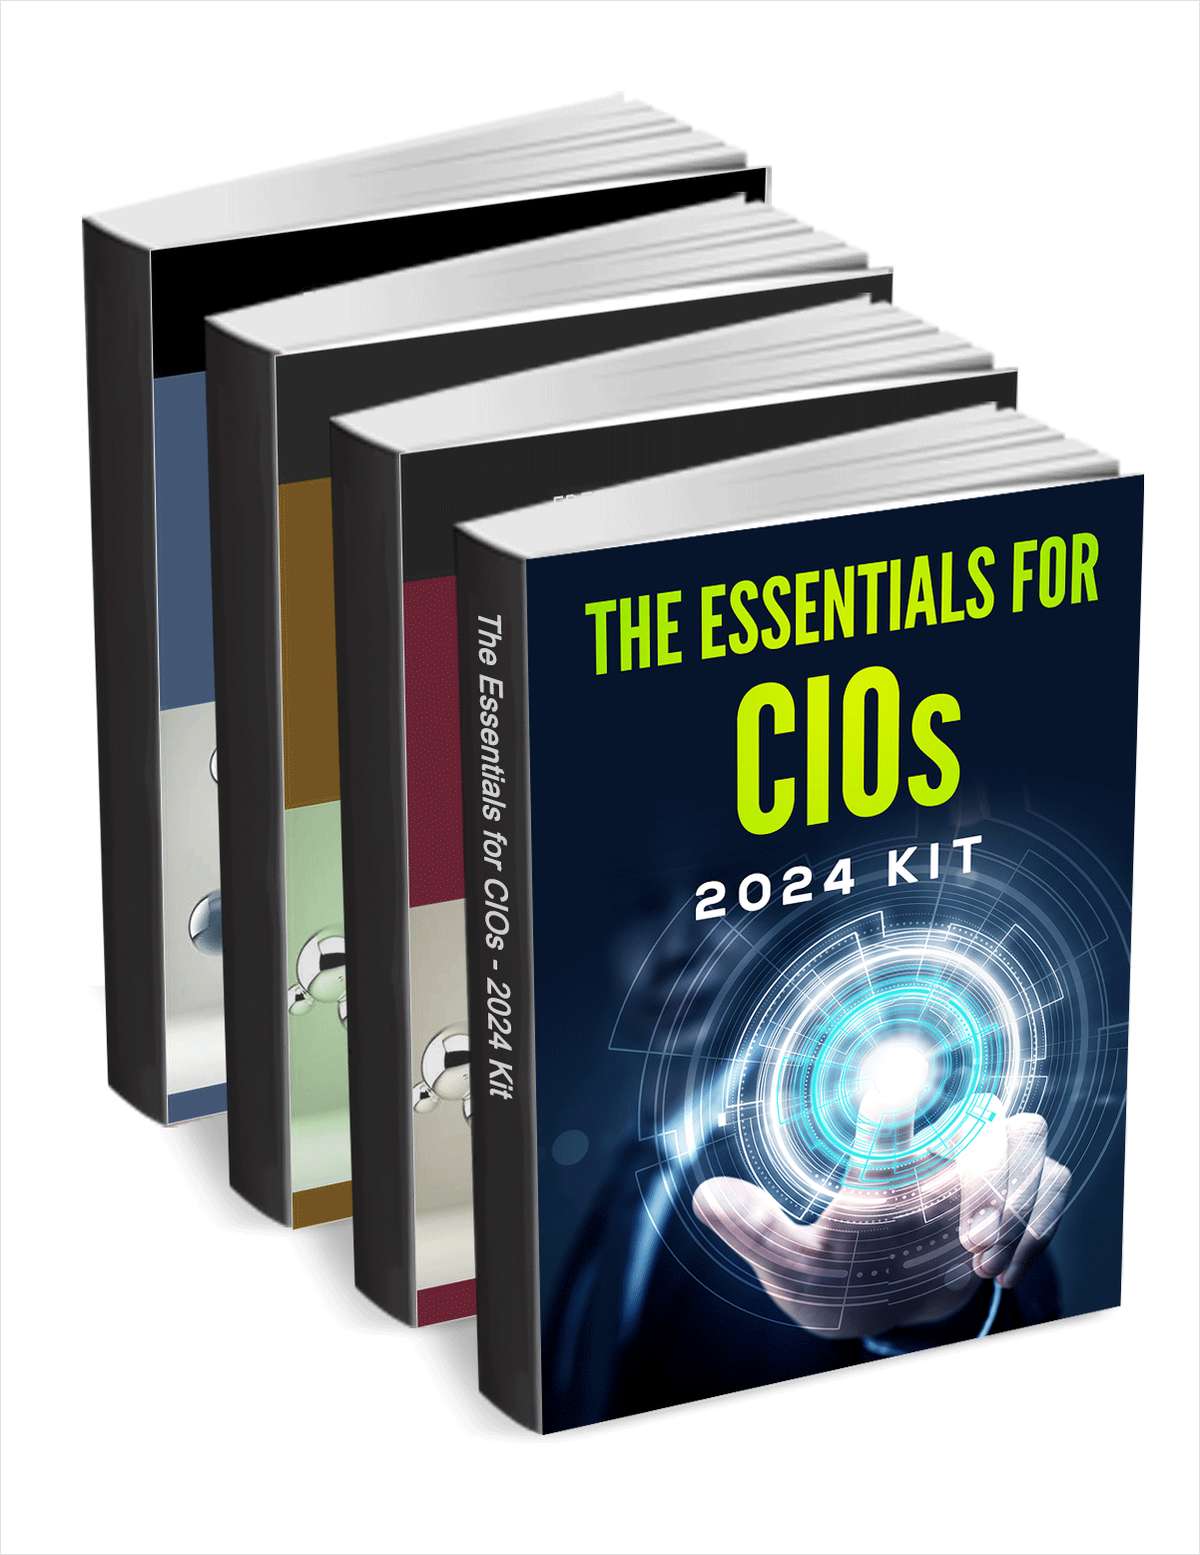 The Essentials for CIOs - 2024 Kit